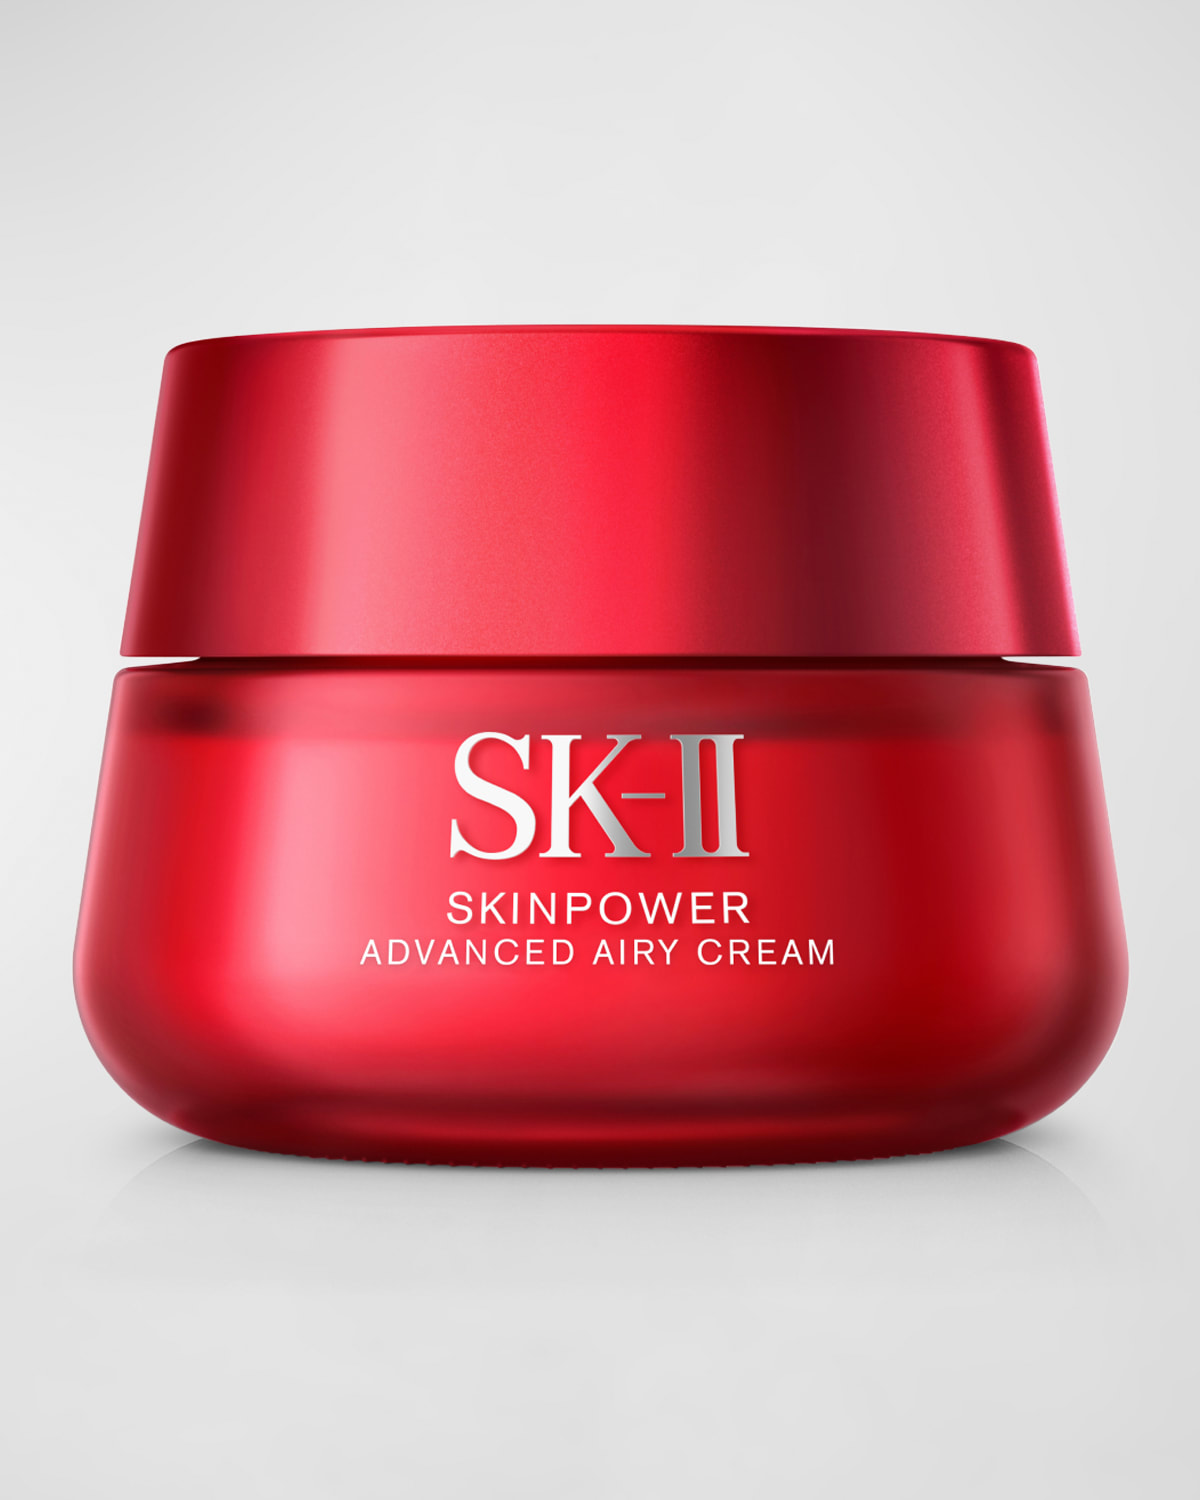 Skinpower Advanced Airy Cream, 2.7 oz.